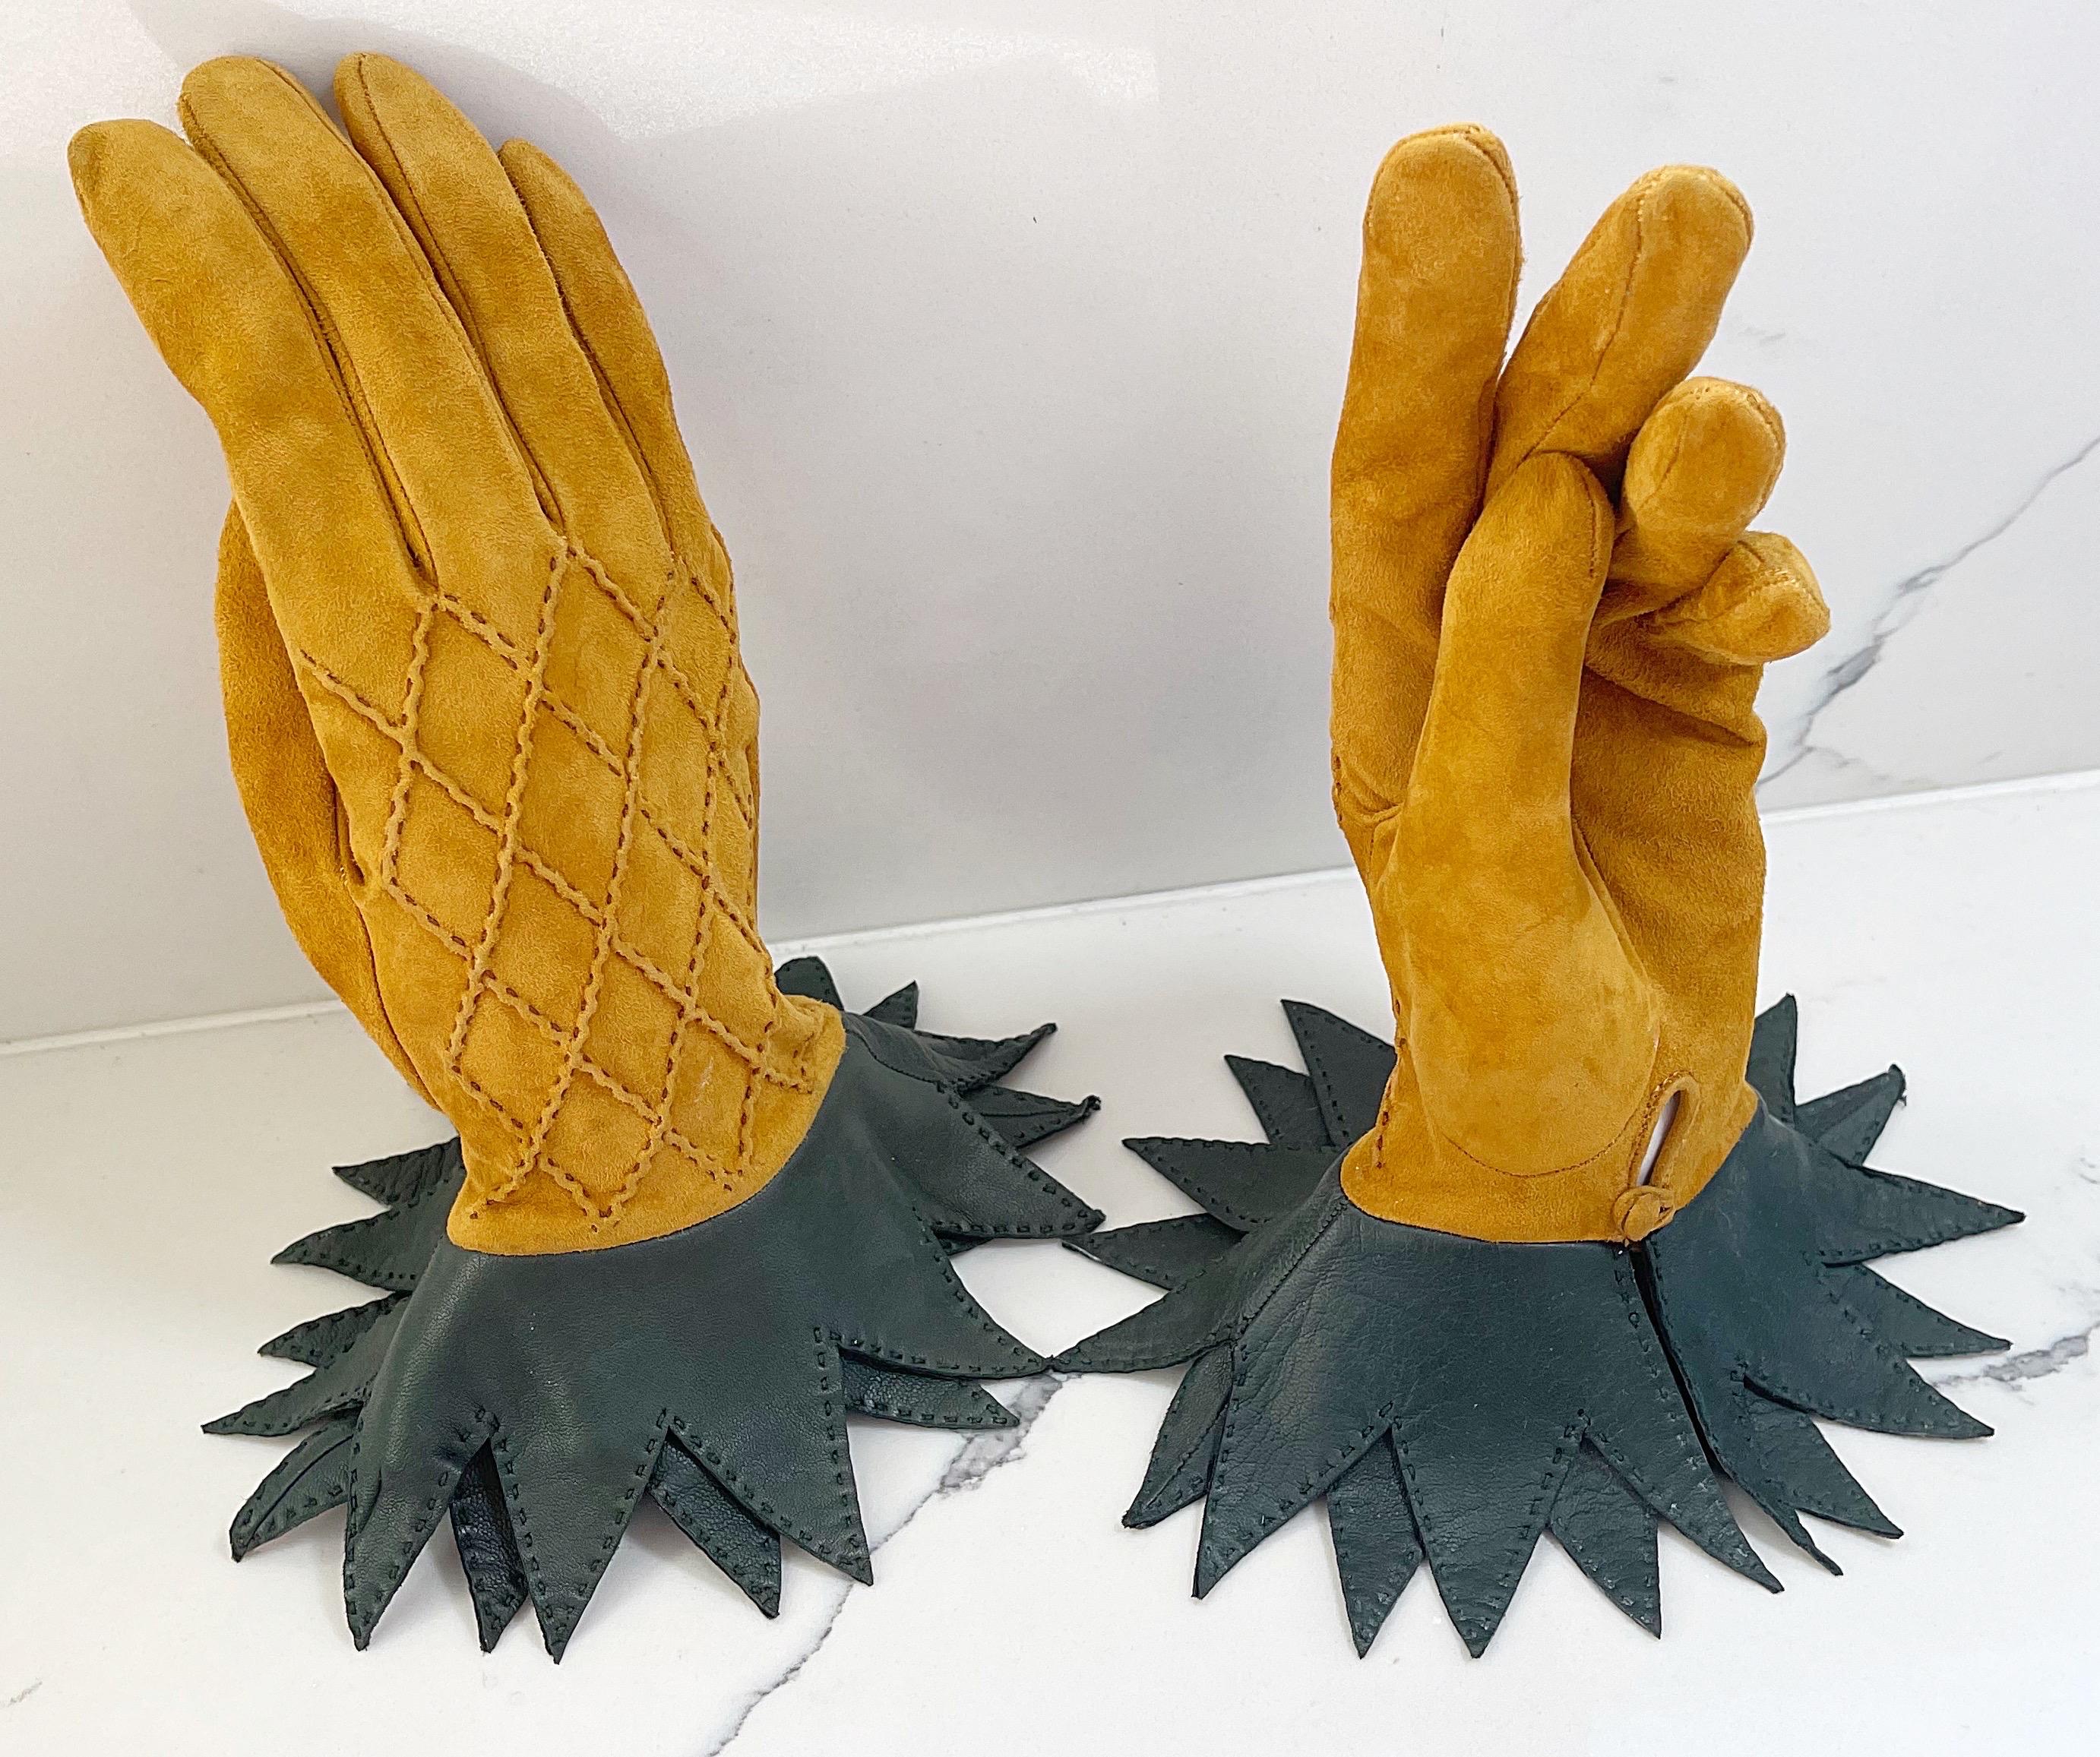 Hermès 1990s Vintage Pineapple Novelty Suede Leather Size 7.5 90s Gloves For Sale 3